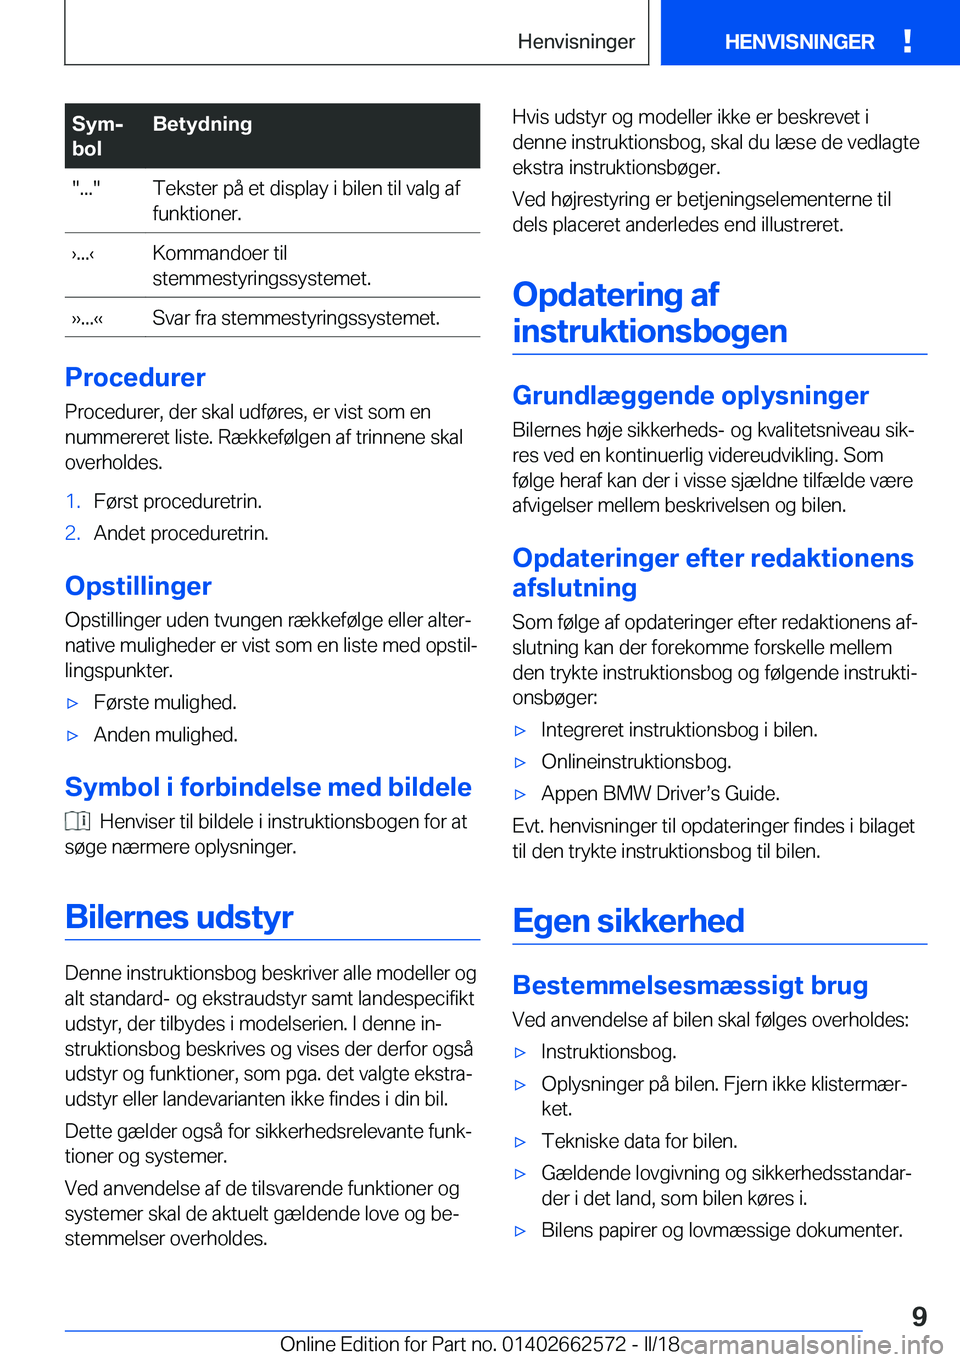 BMW M2 2018  InstruktionsbØger (in Danish) �S�y�mj
�b�o�l�B�e�t�y�d�n�i�n�g�"�.�.�.�"�T�e�k�s�t�e�r� �p�å� �e�t� �d�i�s�p�l�a�y� �i� �b�i�l�e�n� �t�i�l� �v�a�l�g� �a�f
�f�u�n�k�t�i�o�n�e�r�.